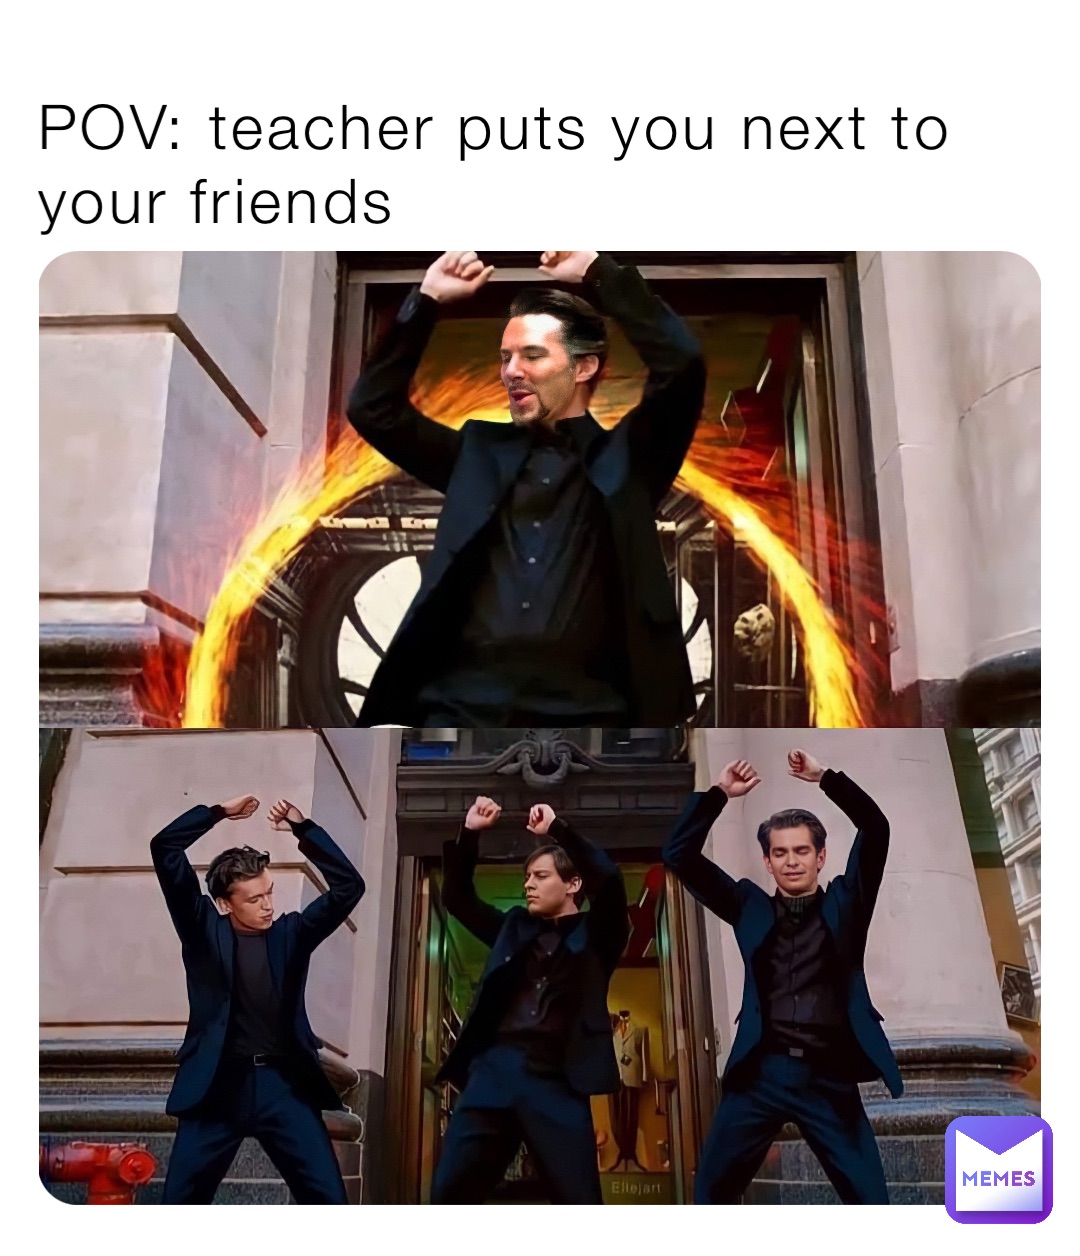 POV: teacher puts you next to your friends